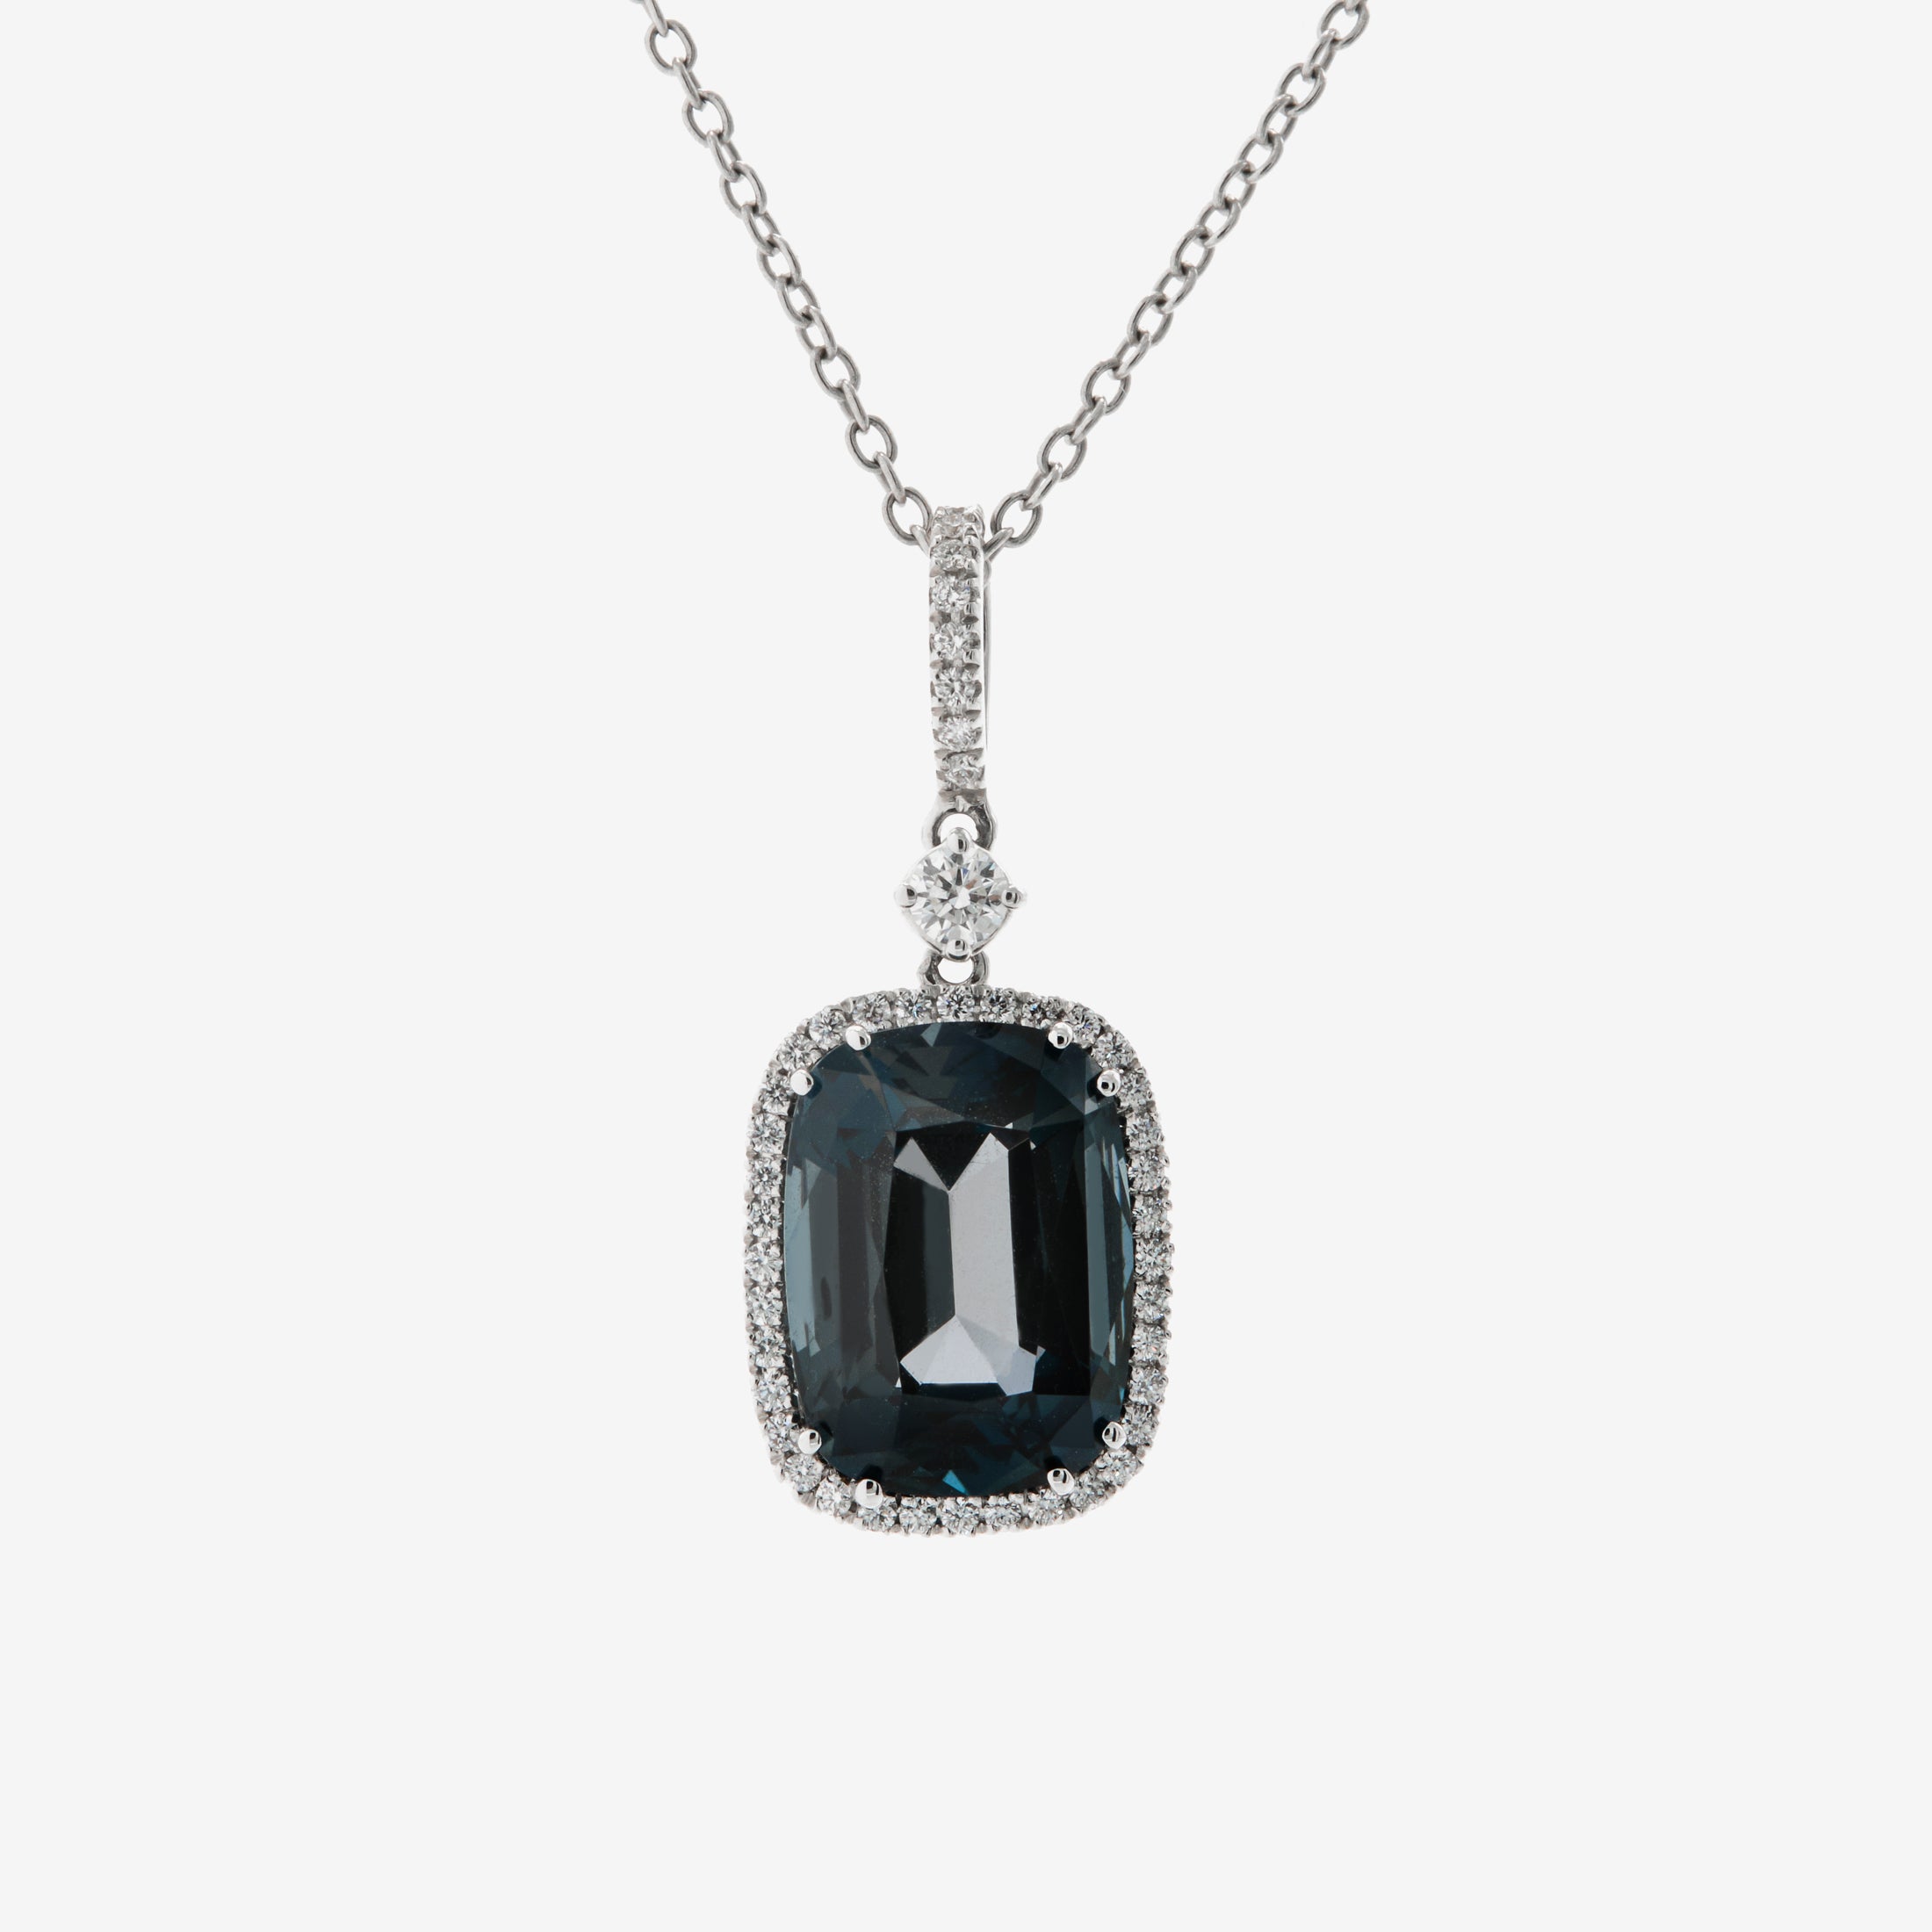 Blue london topaz necklace with diamonds